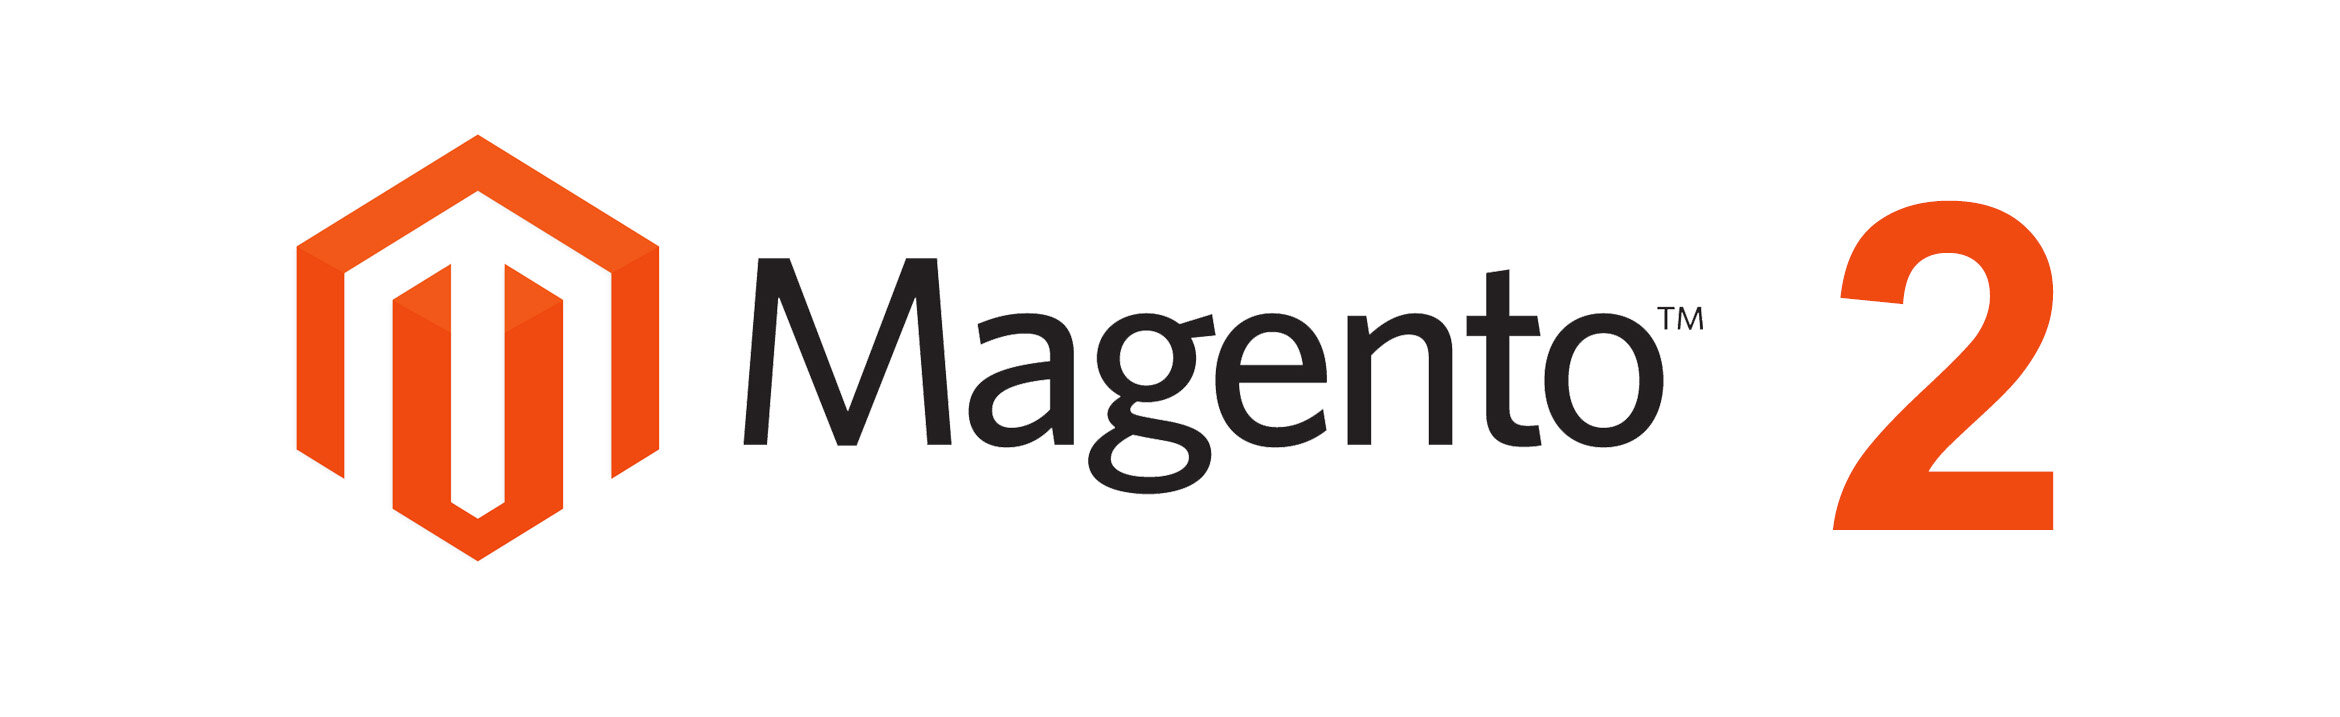 magento2-logo.jpg